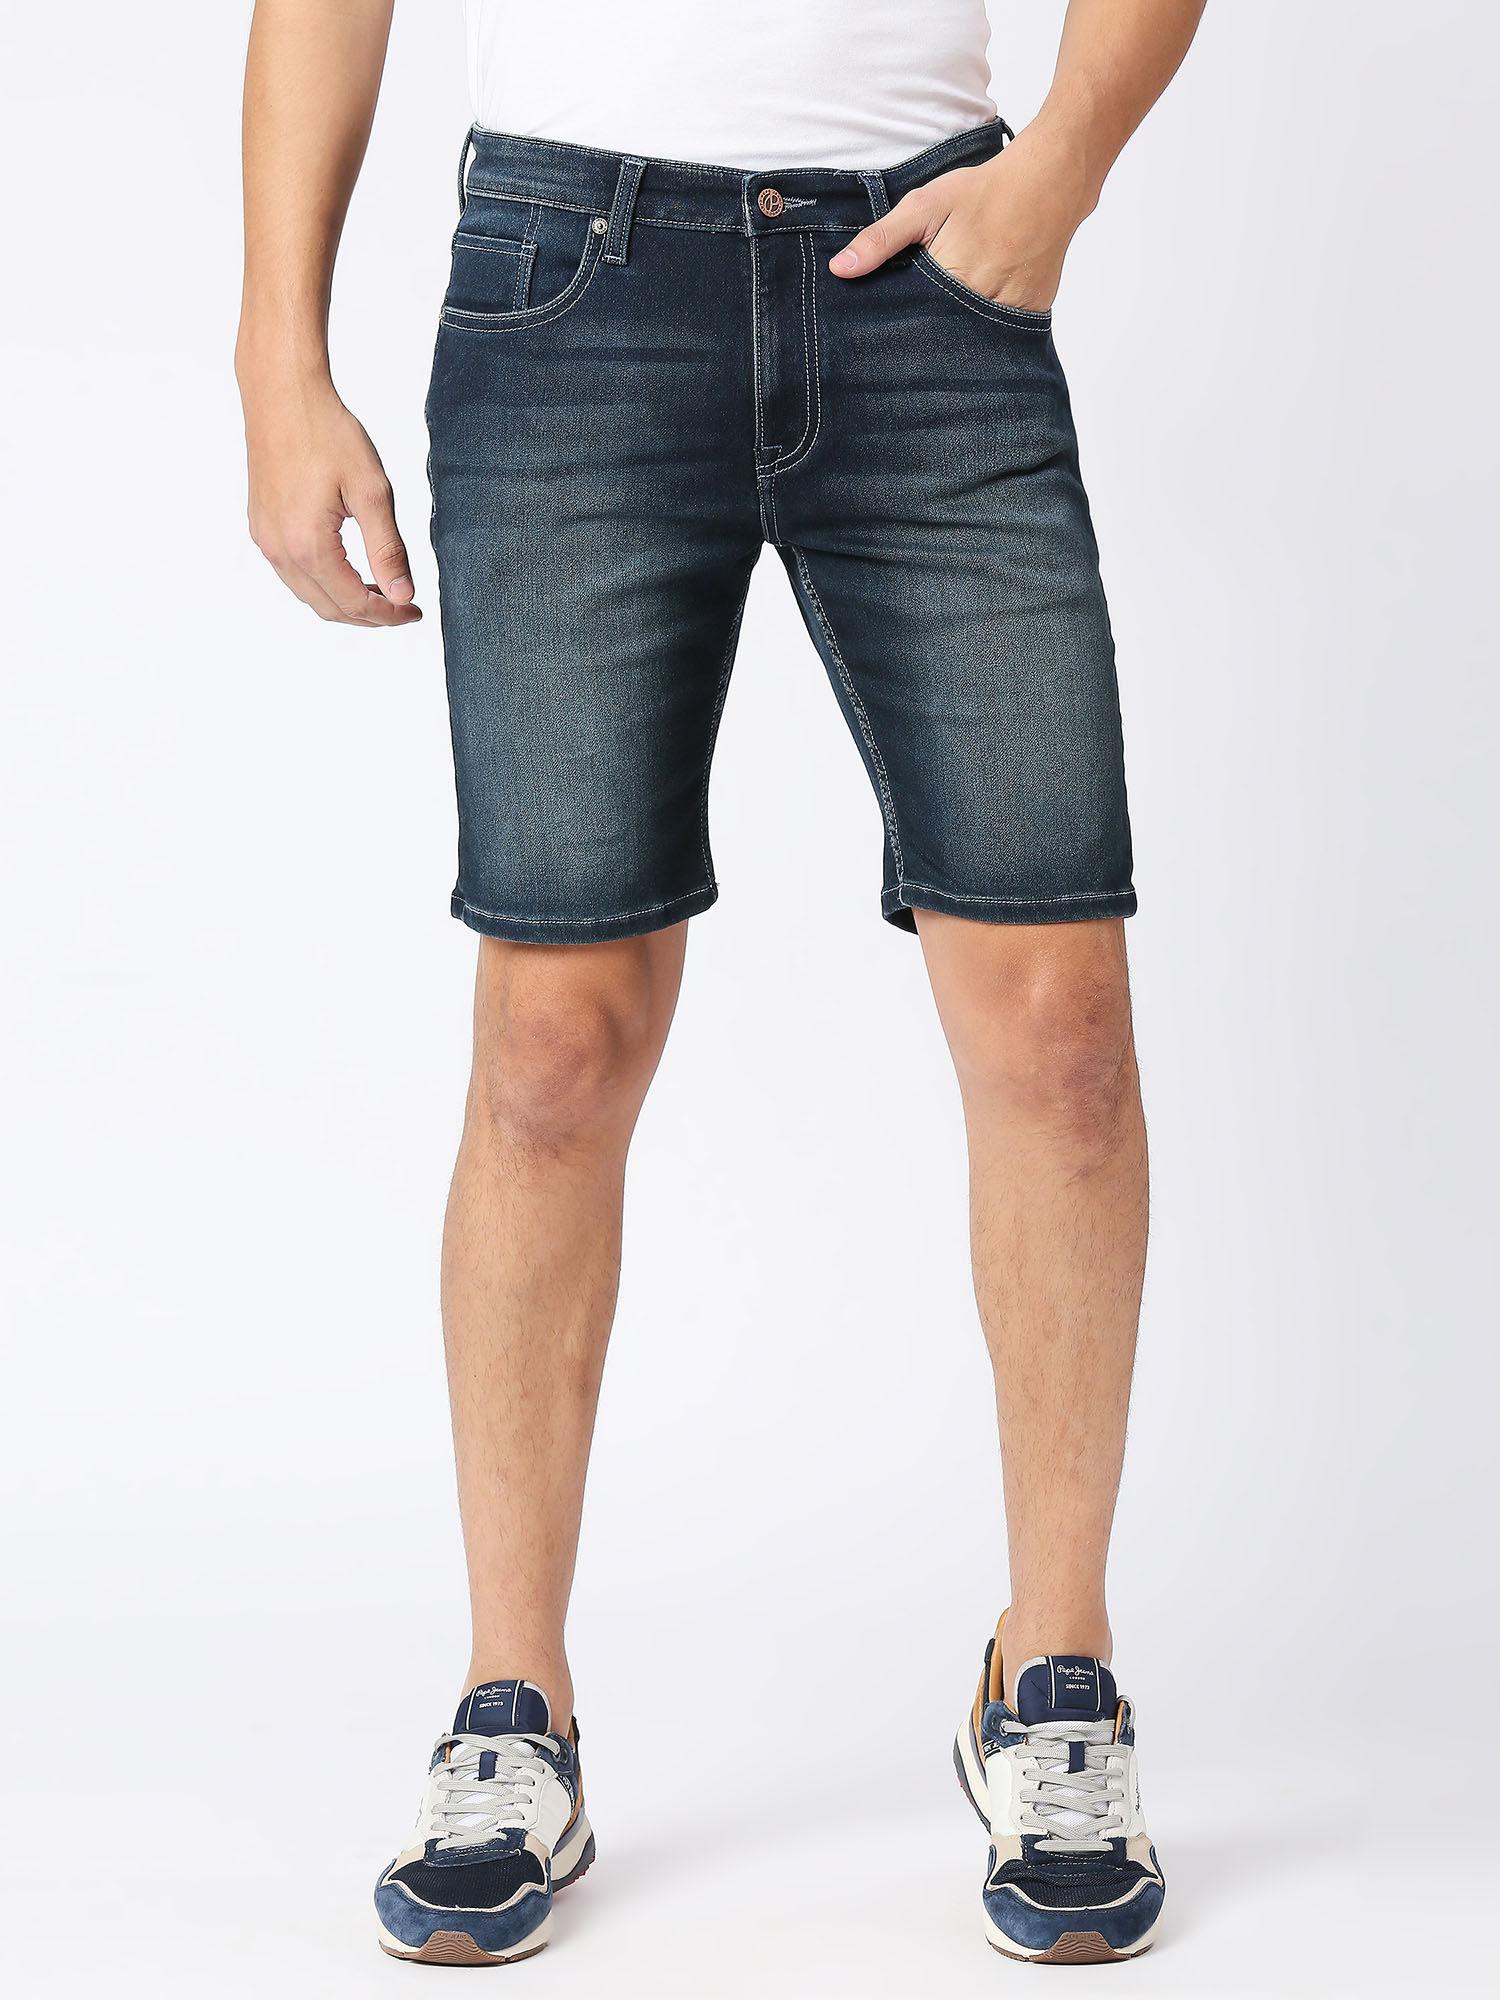 navy blue chinox shorts regular fit mid waist shorts